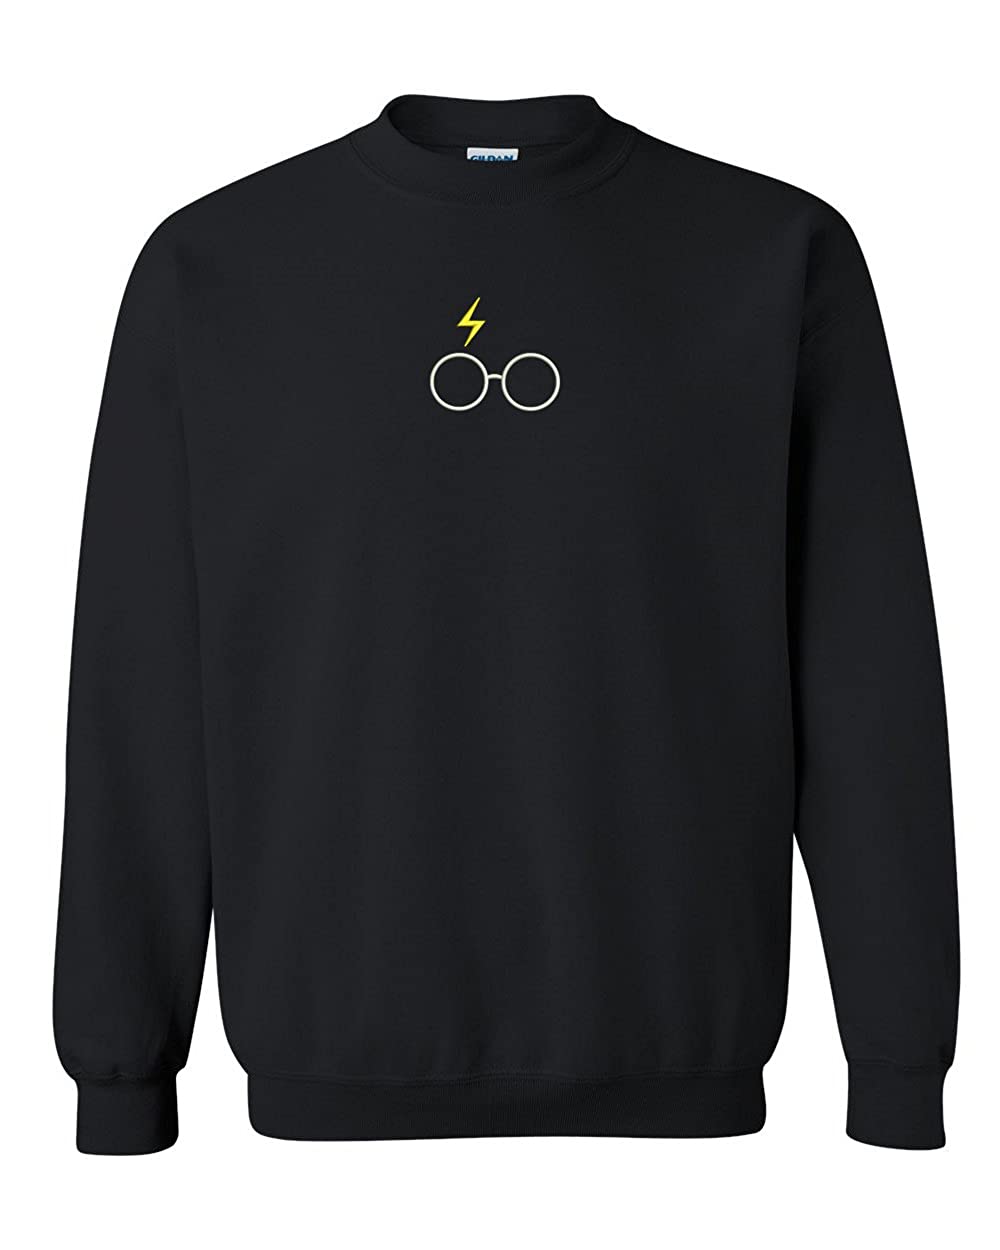 Trendy Apparel Shop Harry Glasses Embroidered Crewneck Sweatshirt - Black - 2XL